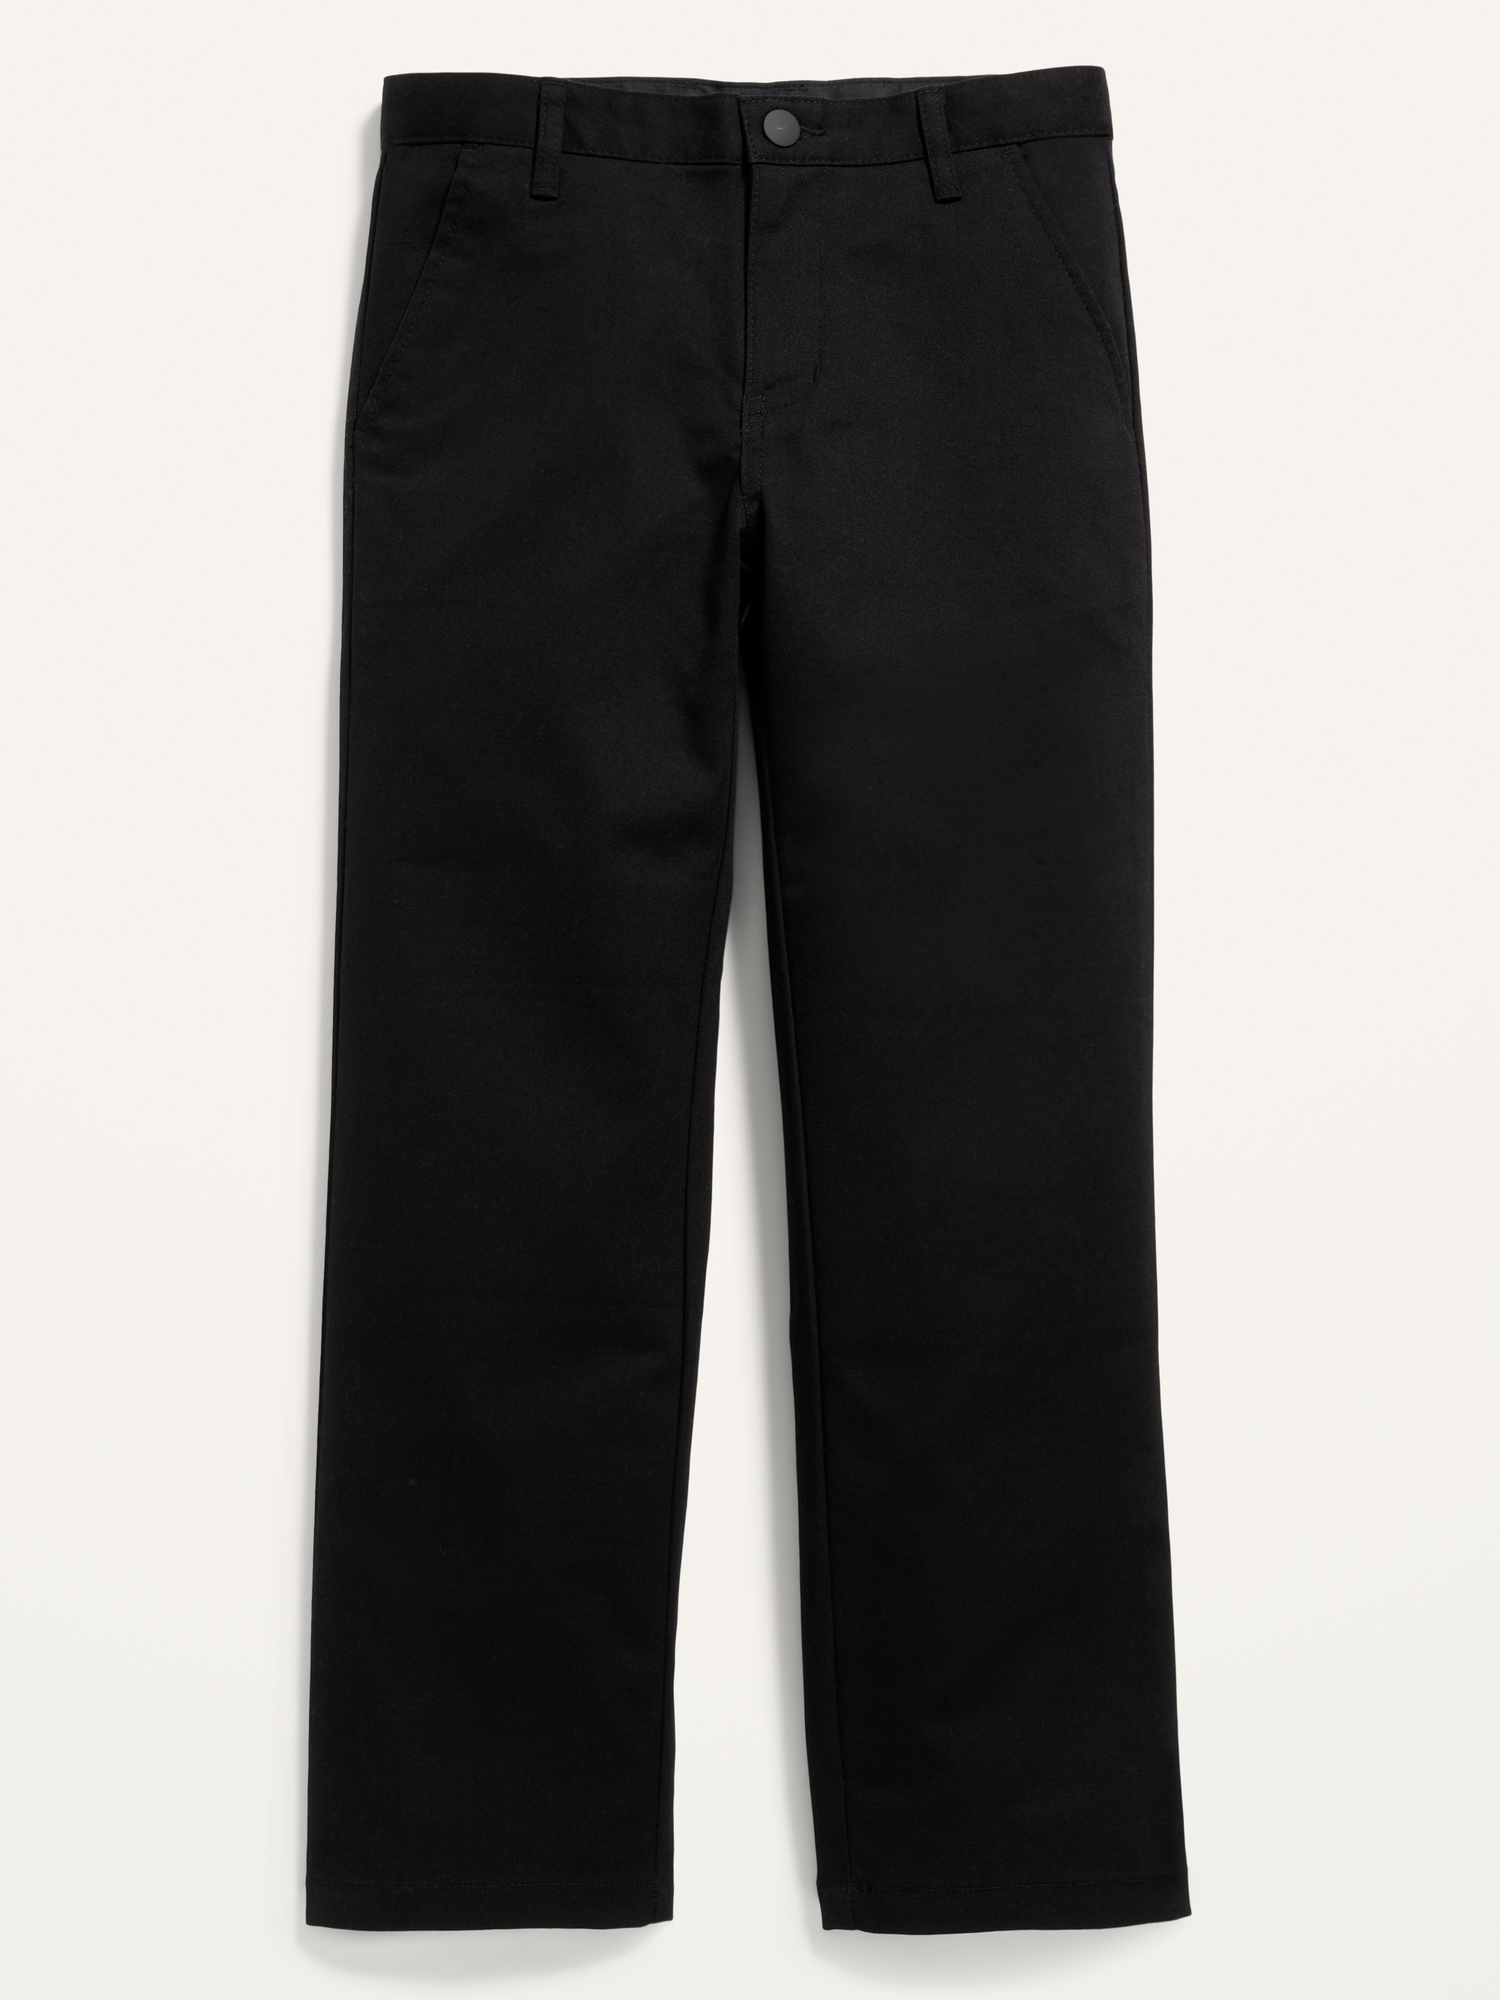 old navy uniform pants for girls｜TikTok Search